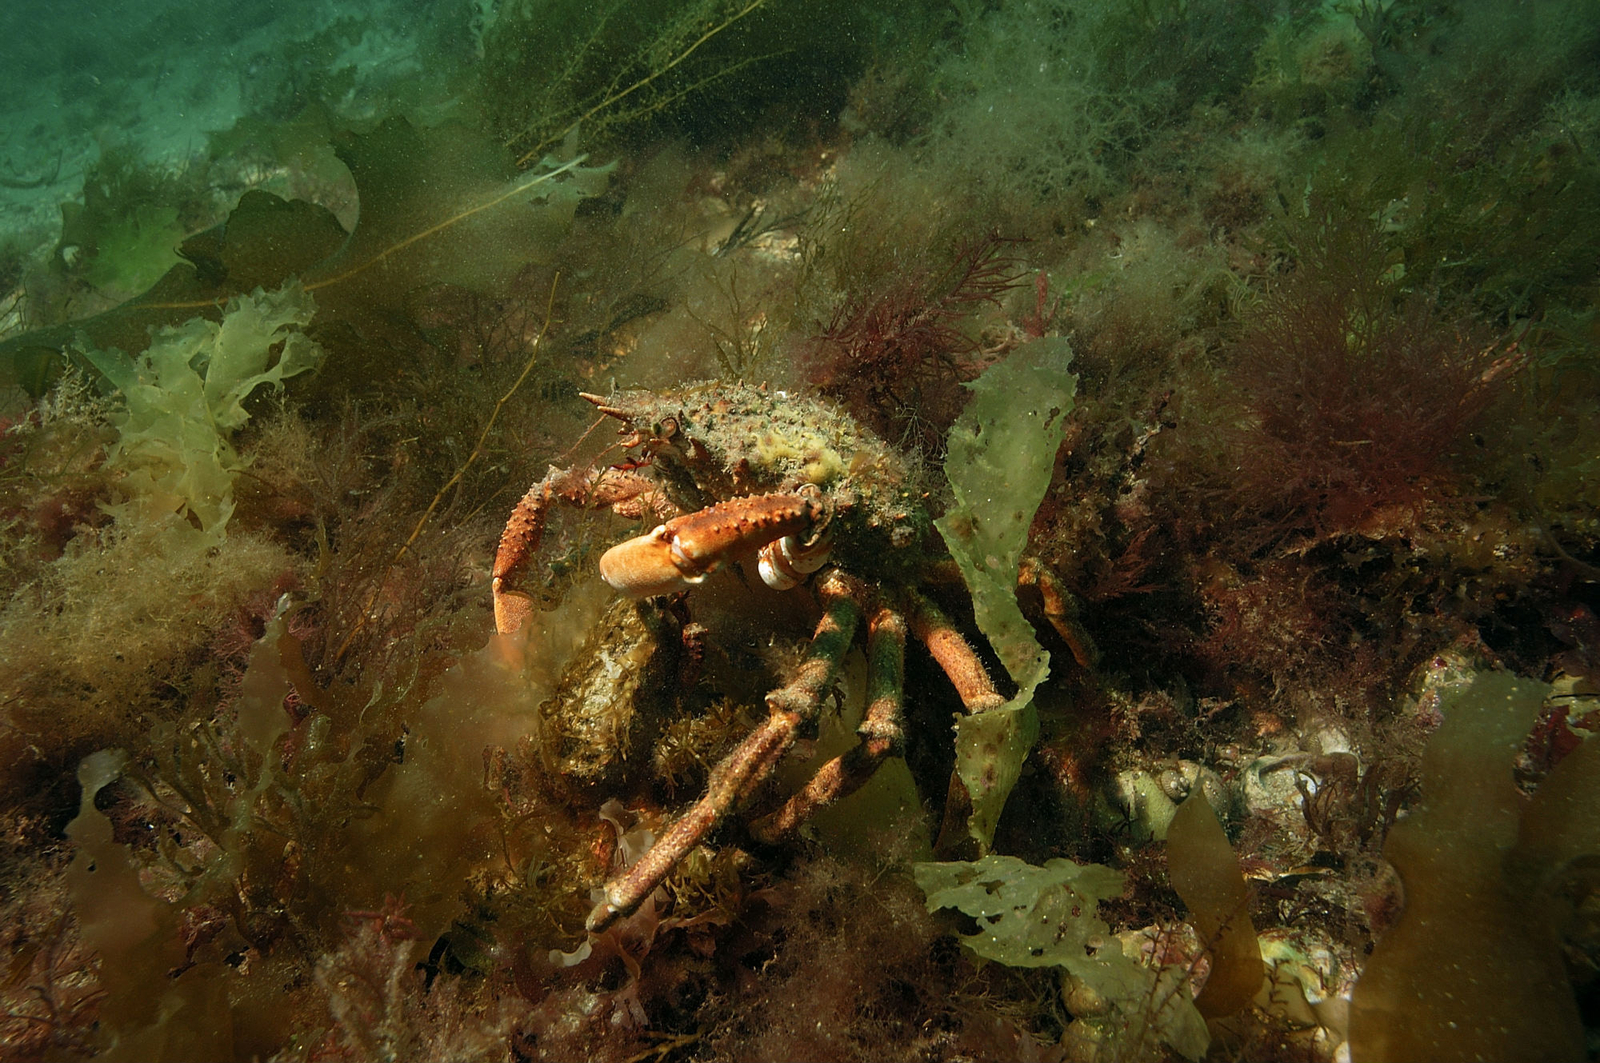 Photographie d'un crabe marin